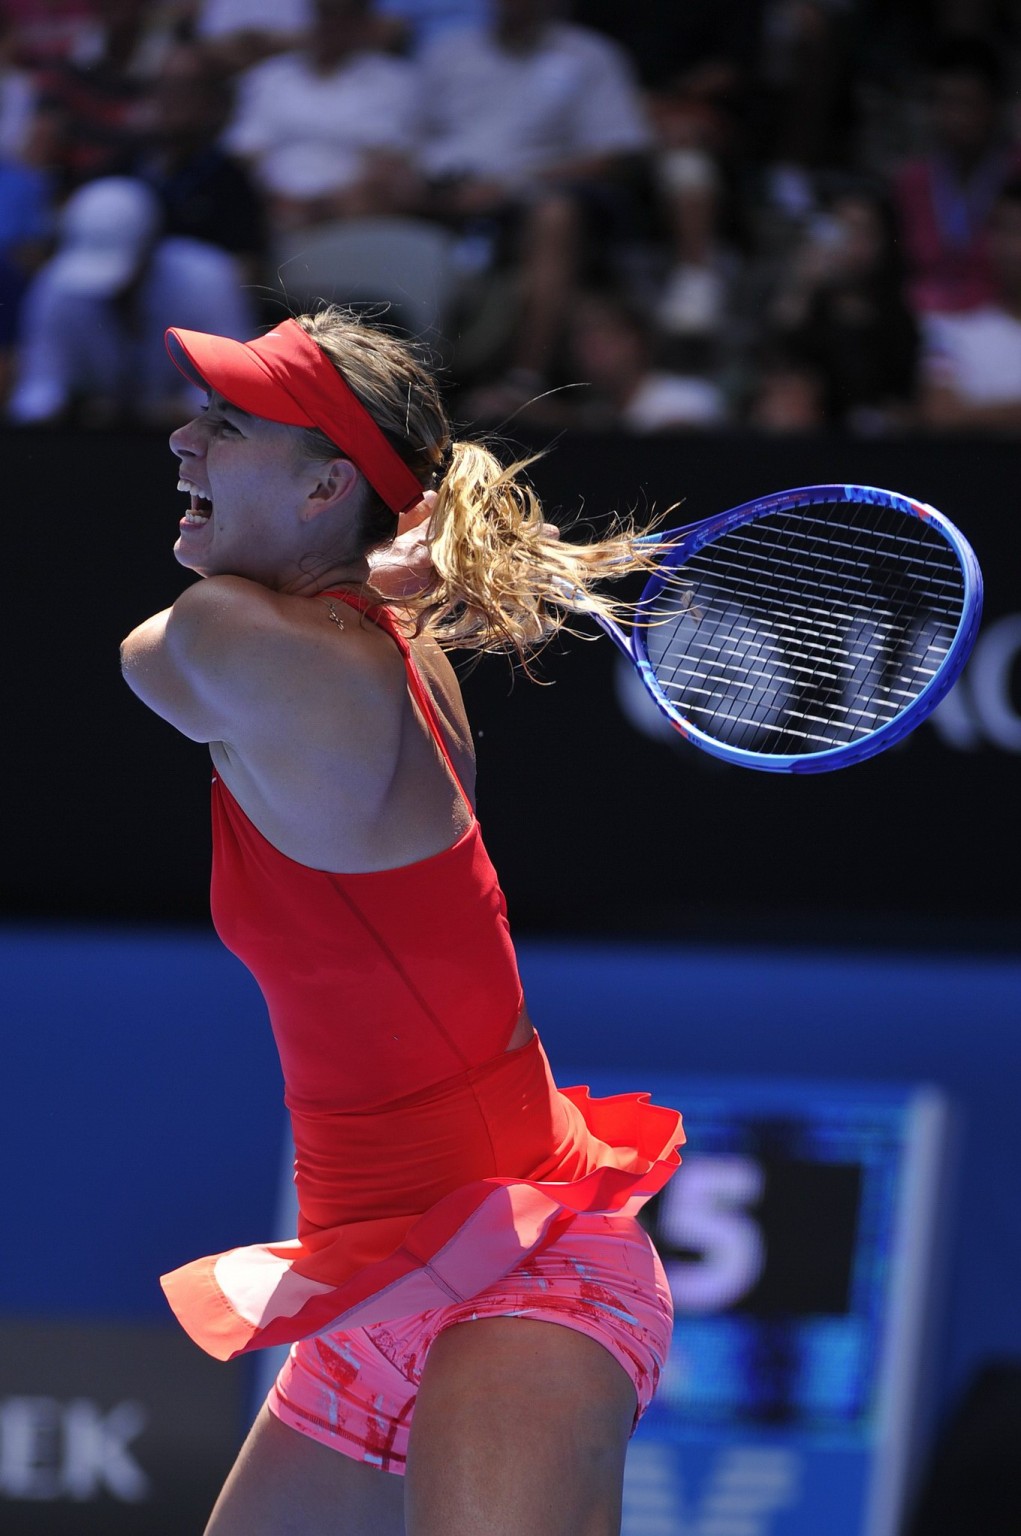 Maria Sharapova flashing her panties at the 2nd Round Match of Australian Open #75174969